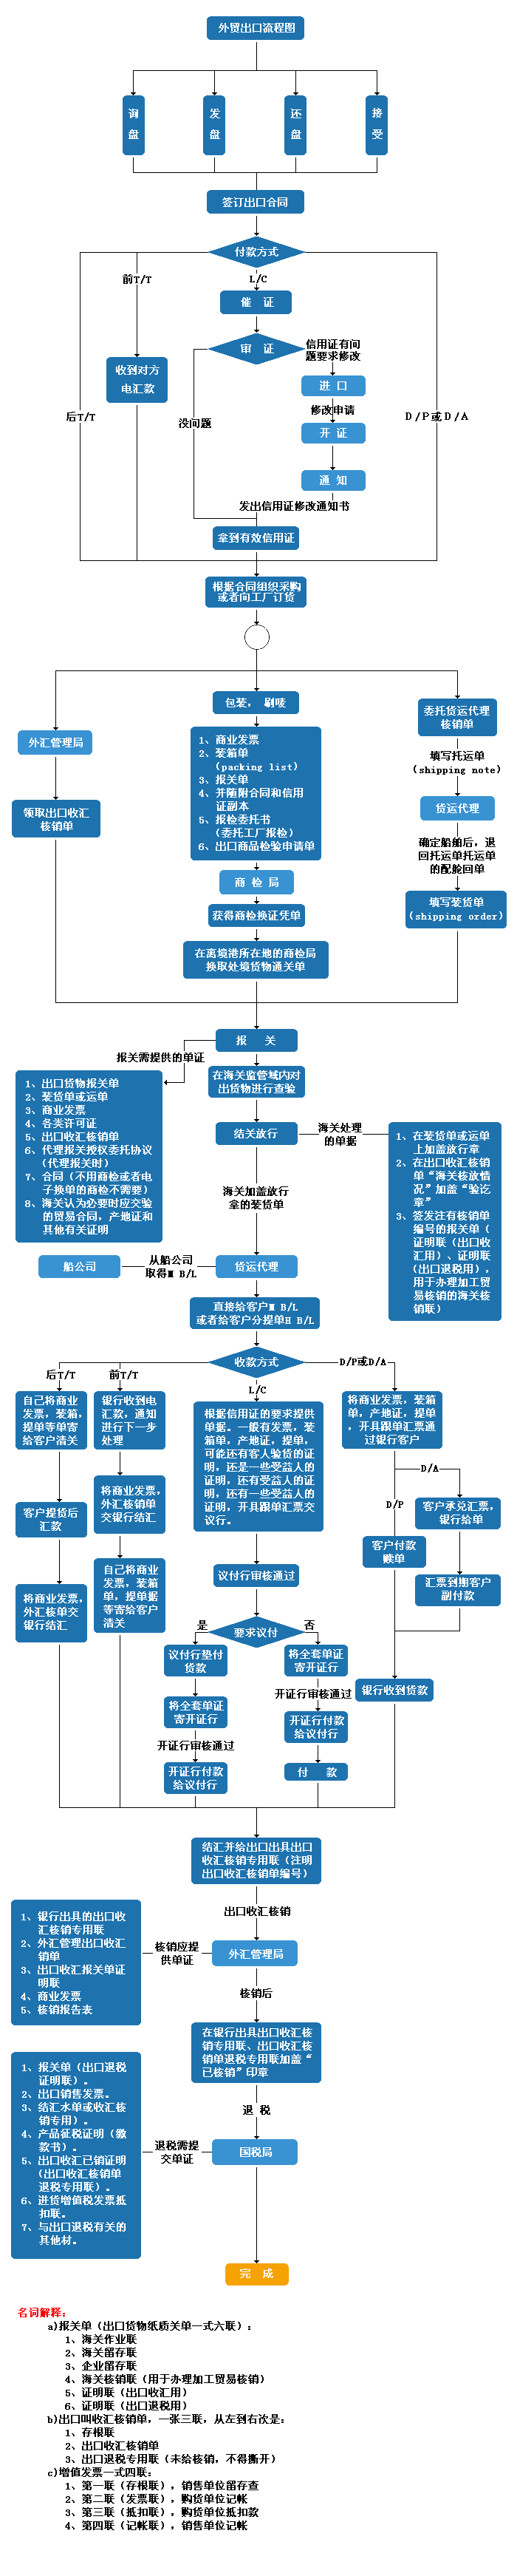 CIF贸易流程图图片